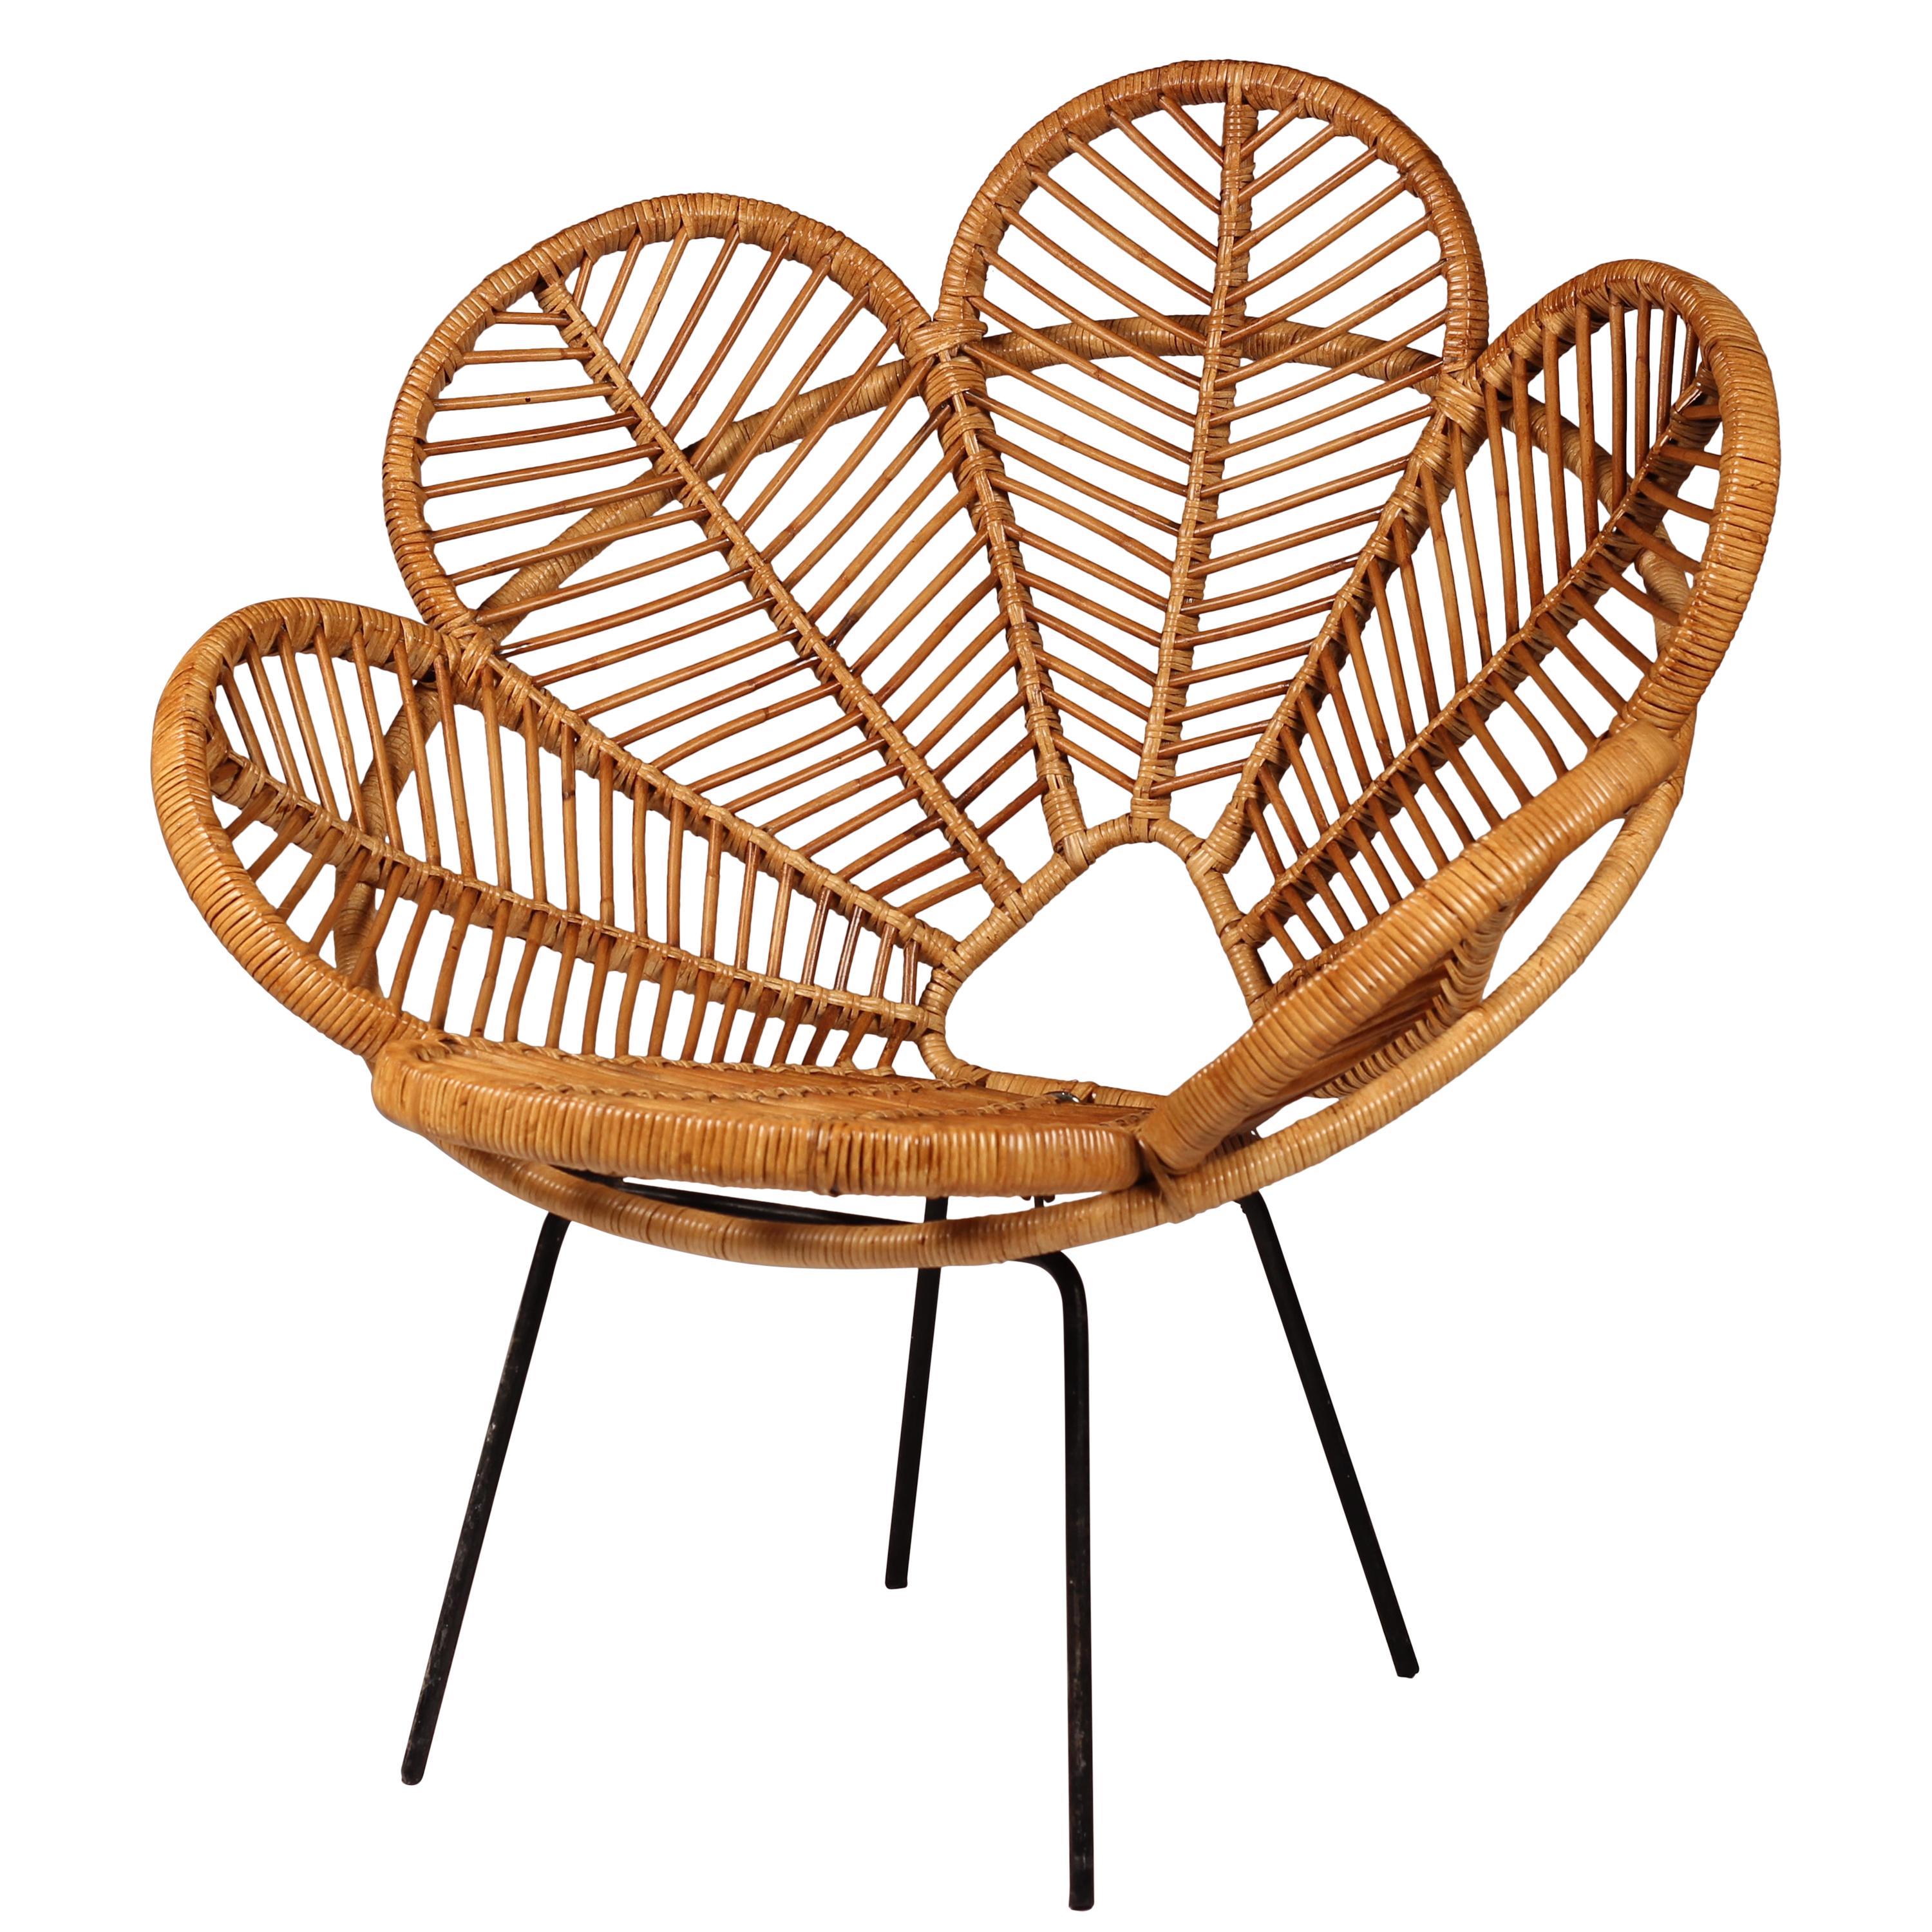 Cane, Wicker and Raffia Flower garden Chairs Mid Century French Design